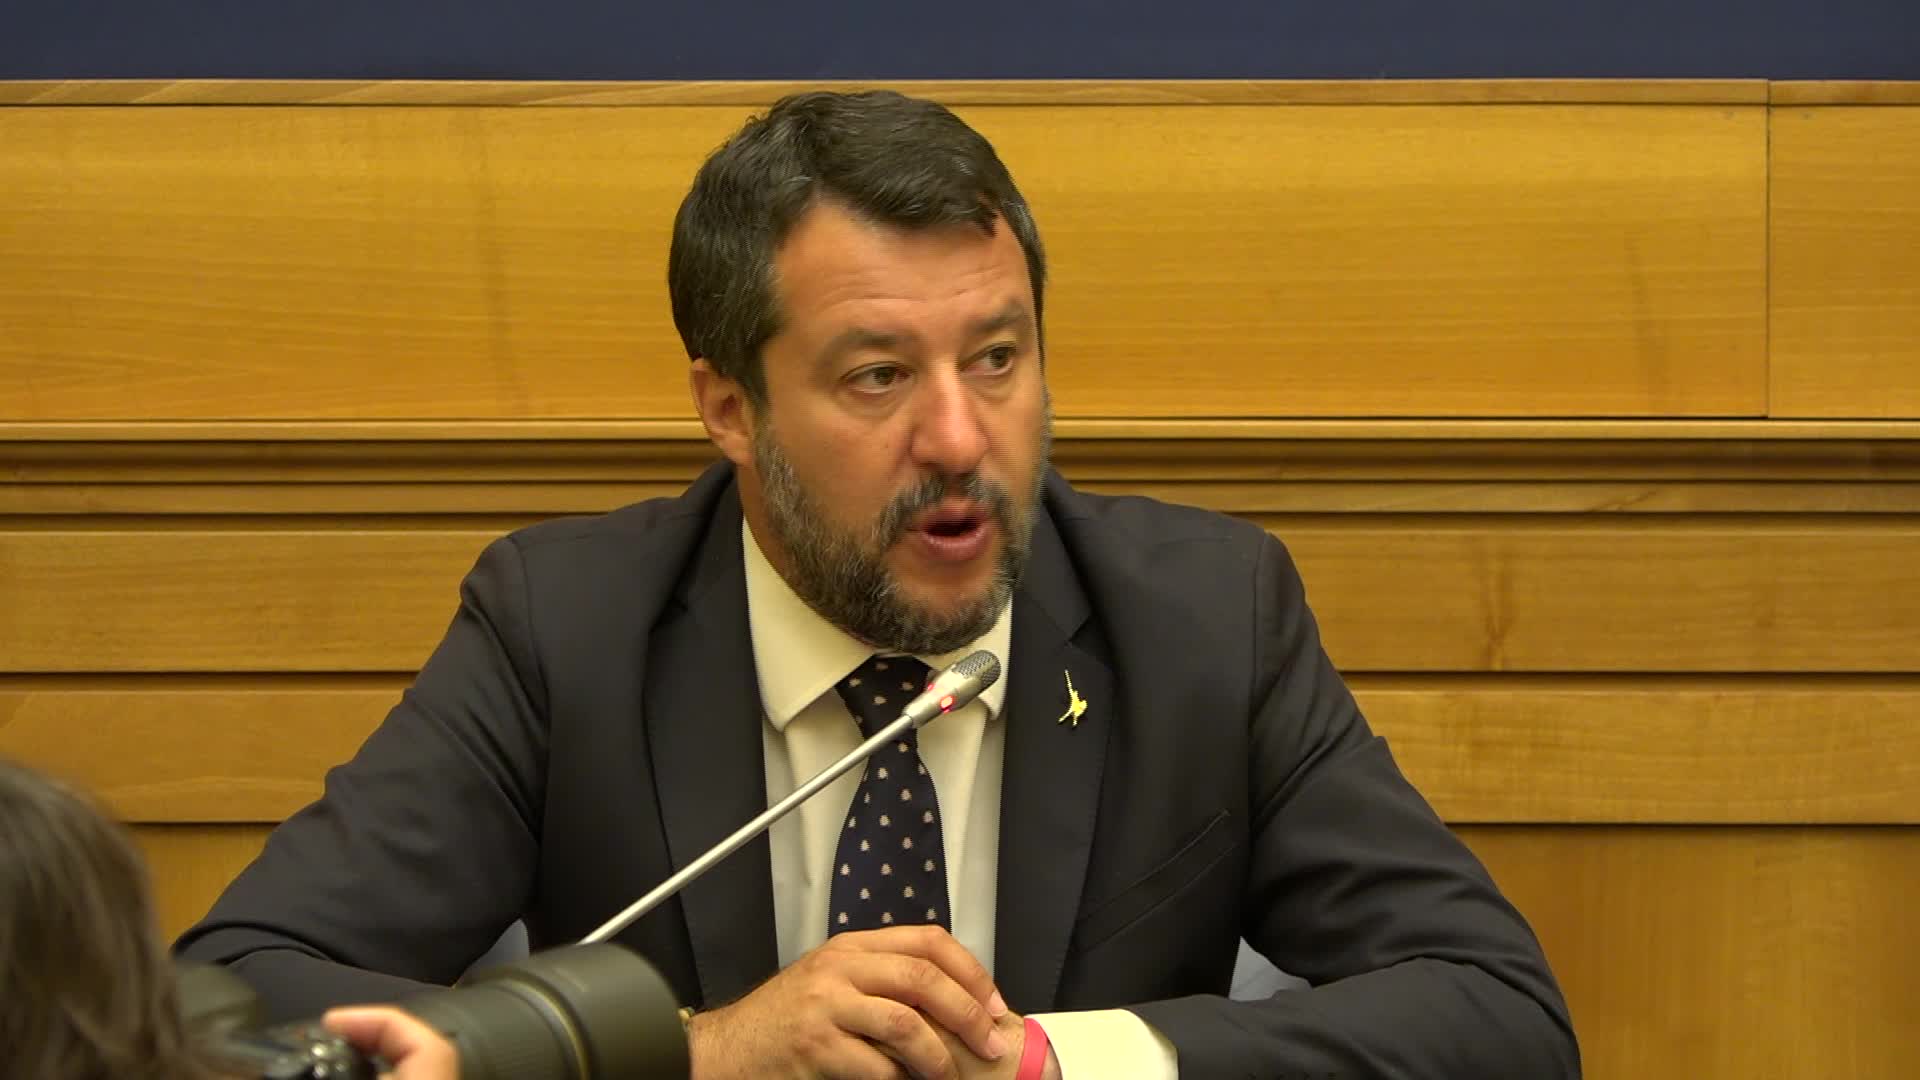 Fondi Lega, arresti nell'inchiesta su Lfc. Salvini: "Tranquillissimi"